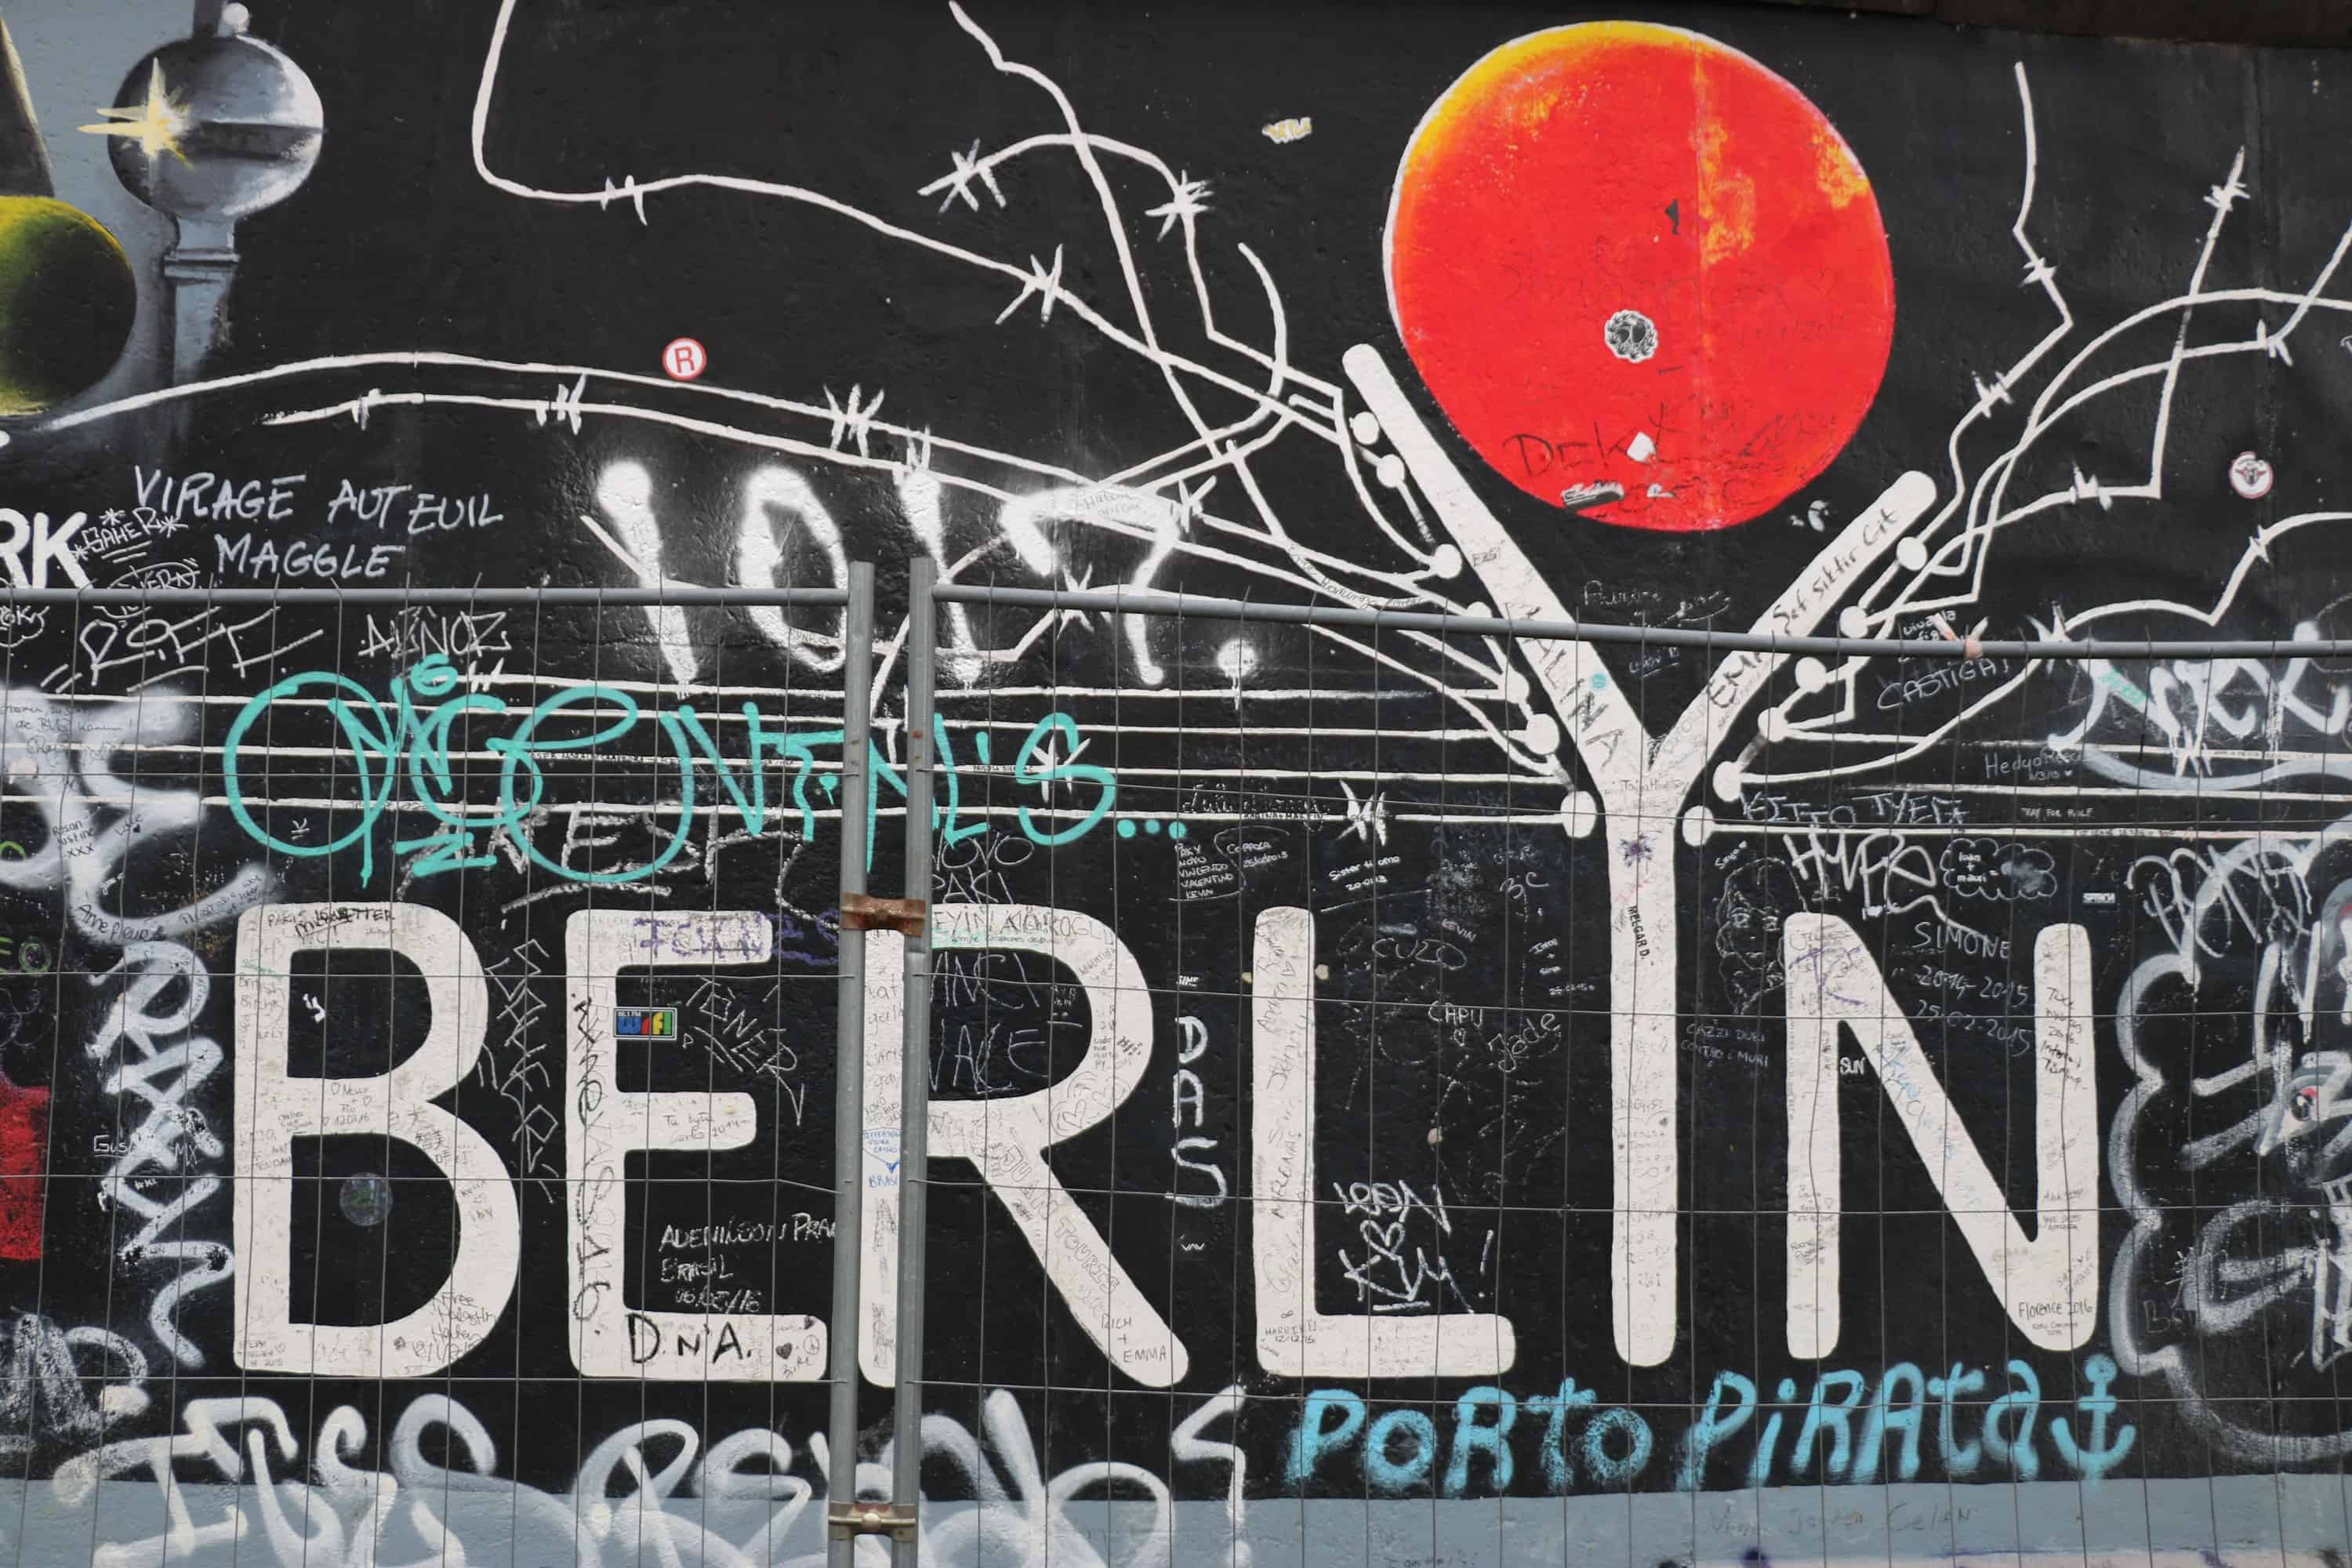 Reasons to love Berlin - Emma Jane Explores